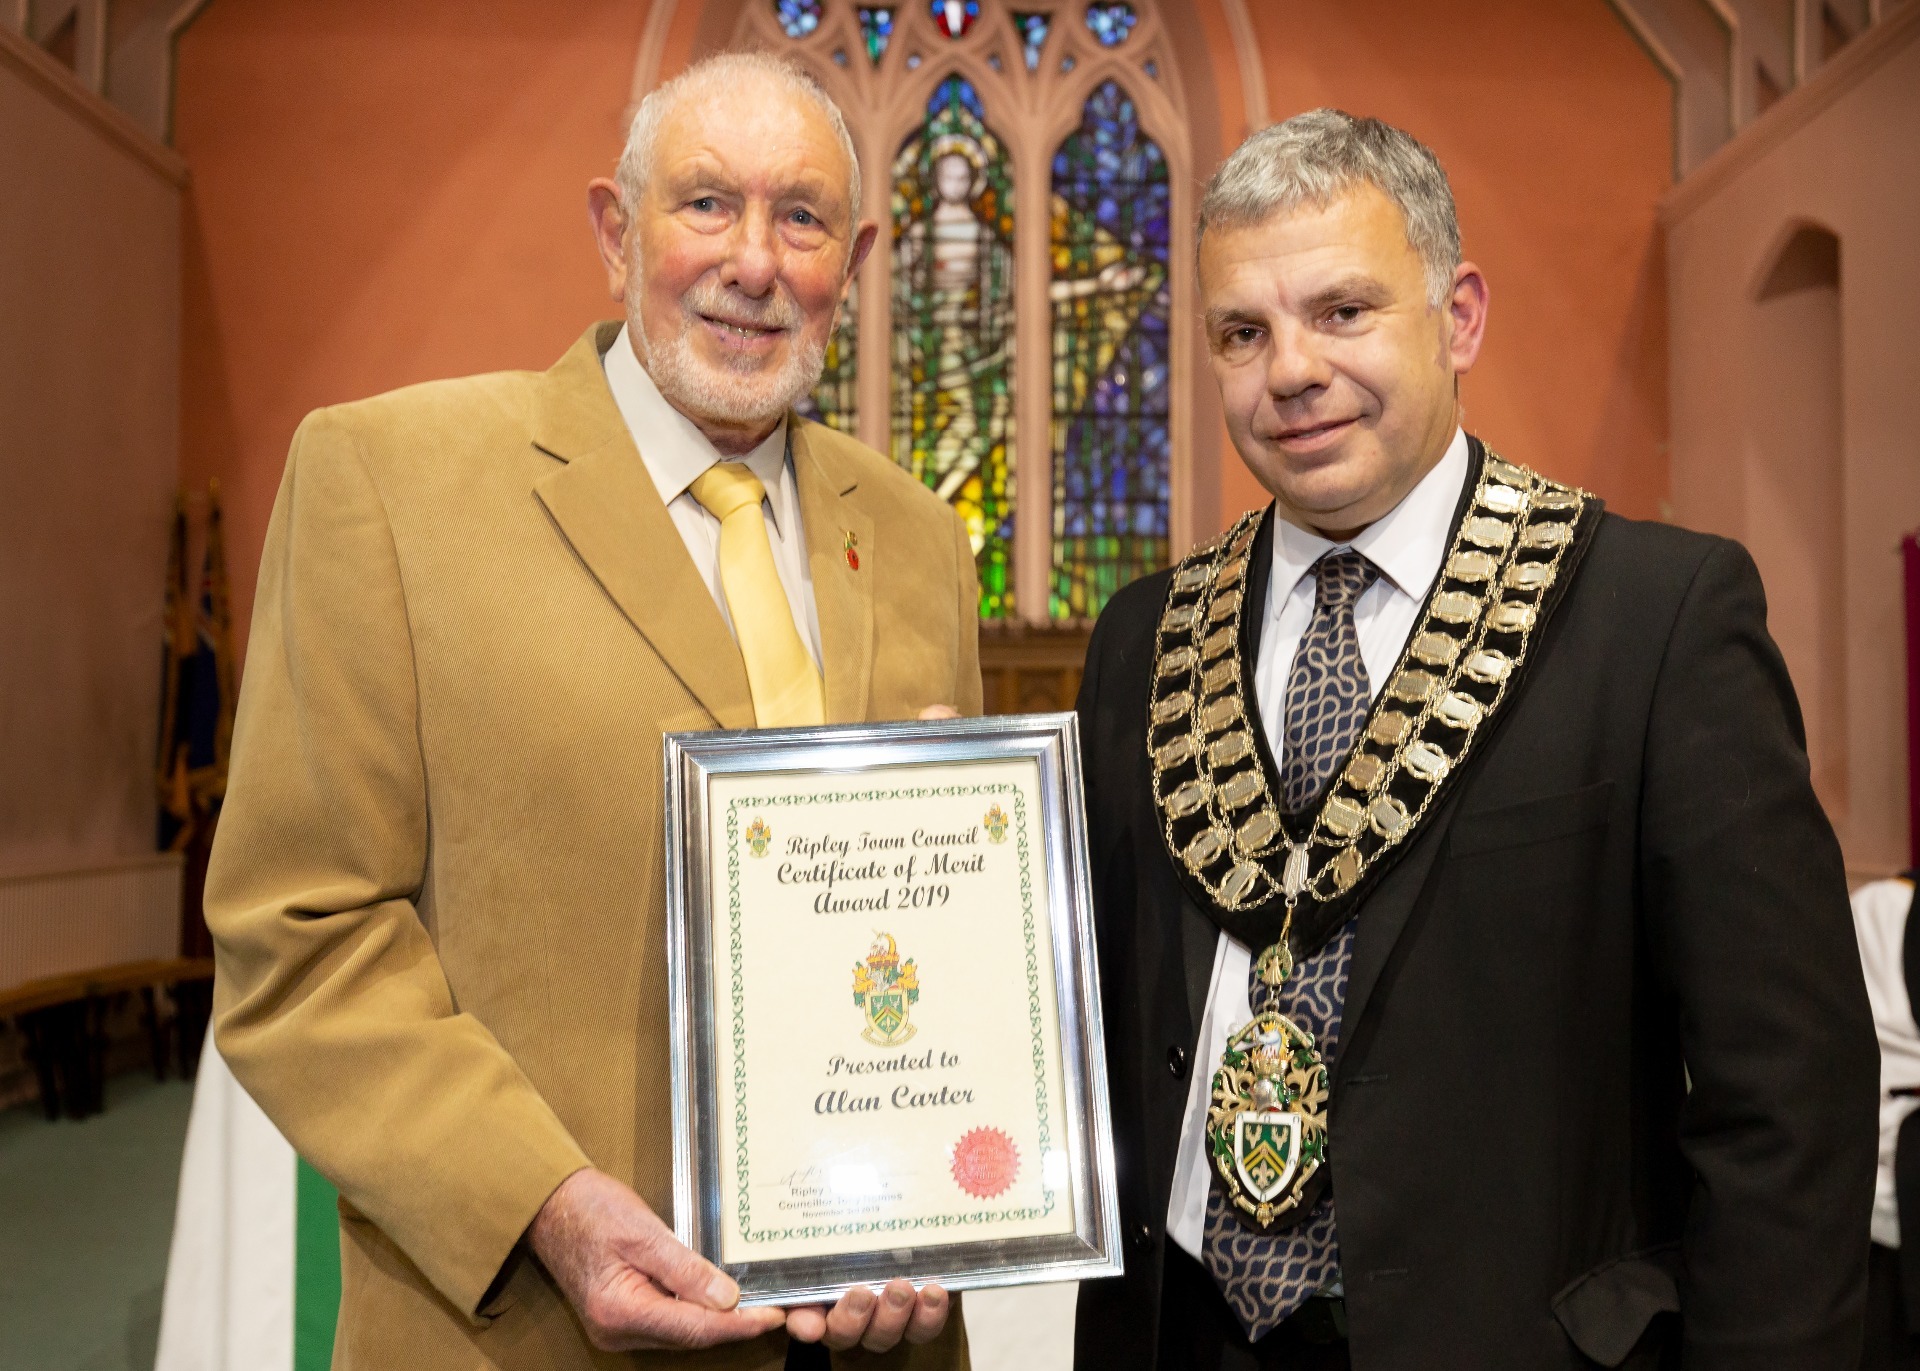 Ripley Town Council Certificate of Merit Alan Carter